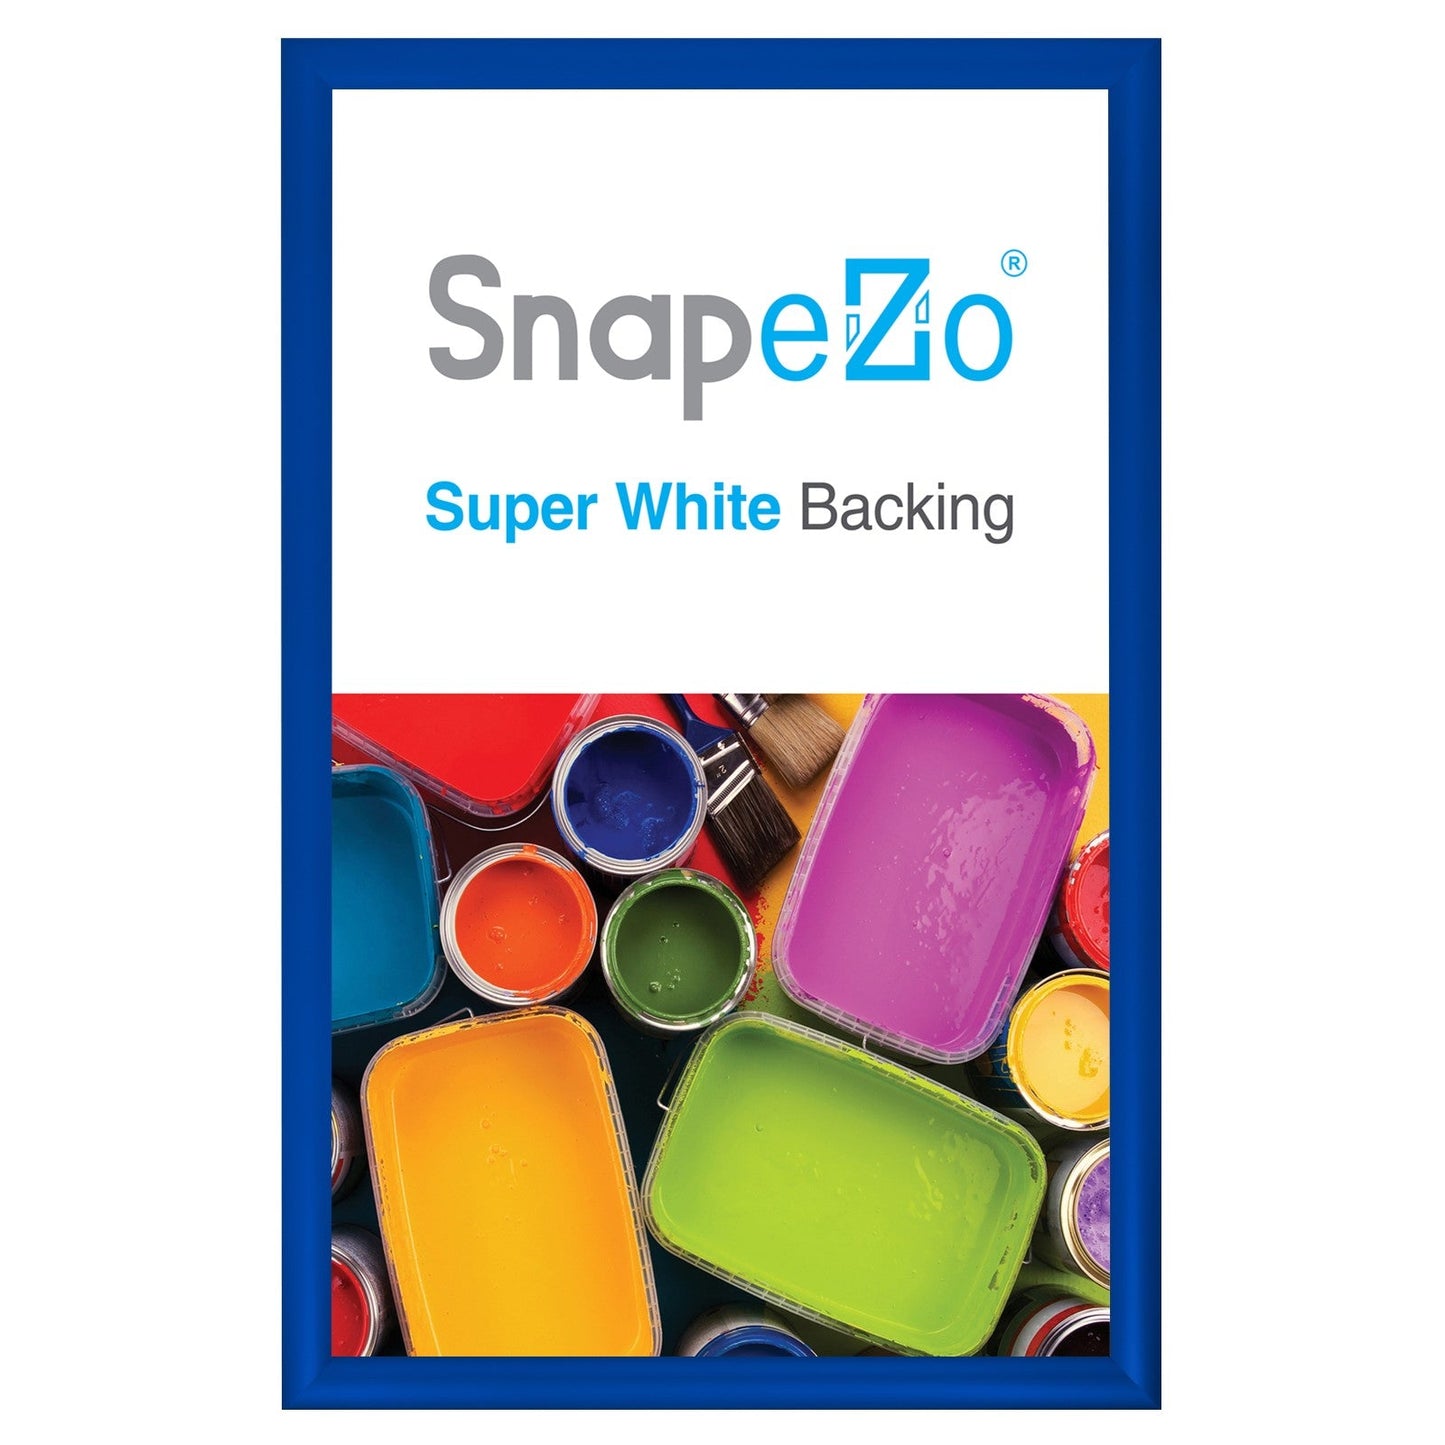 14x23 Blue SnapeZo® Snap Frame - 1.2" Profile